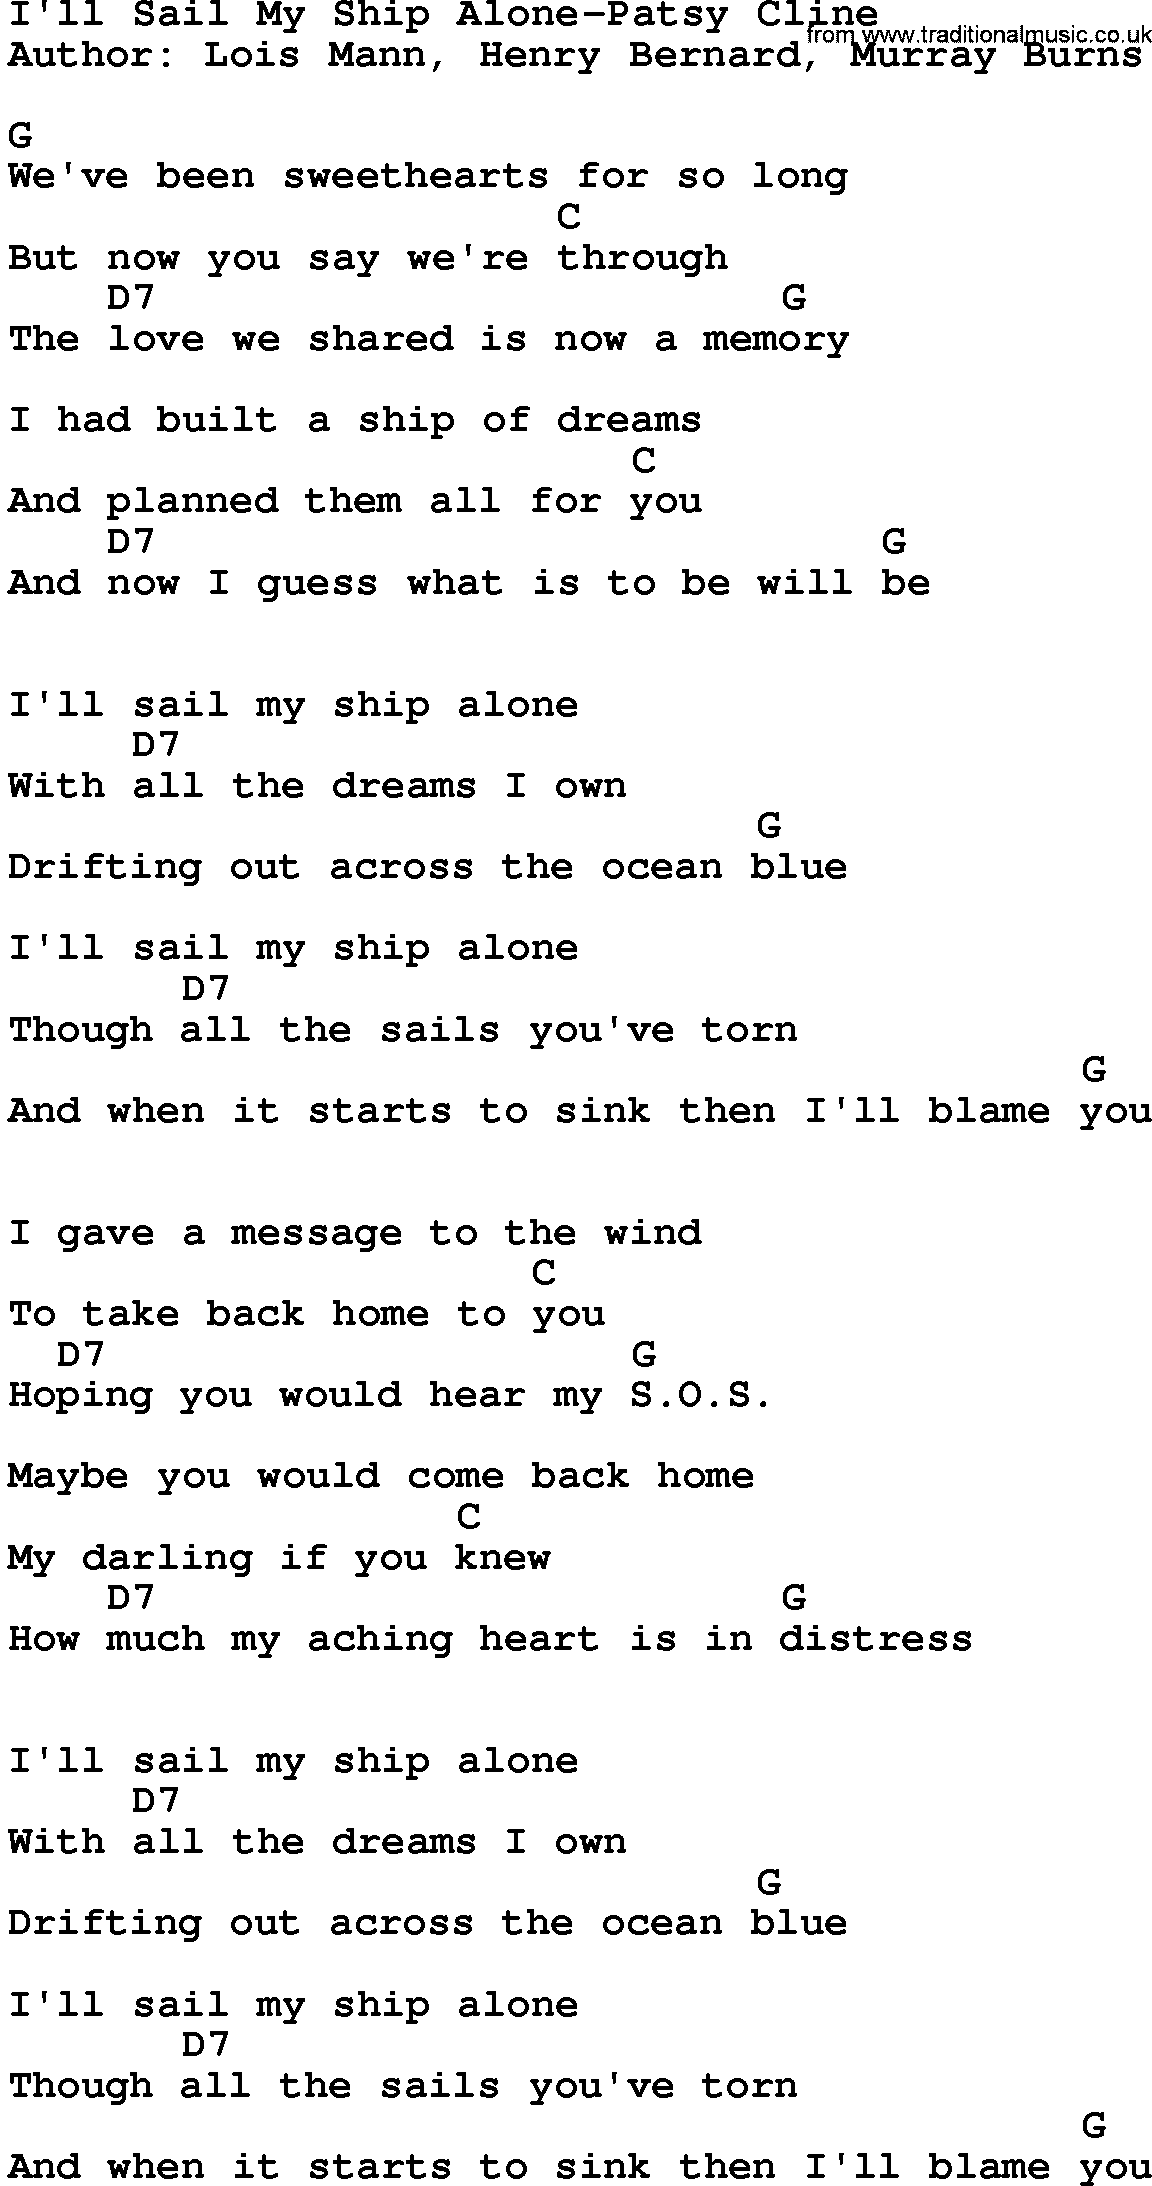 Country music song: I'll Sail My Ship Alone-Patsy Cline lyrics and chords